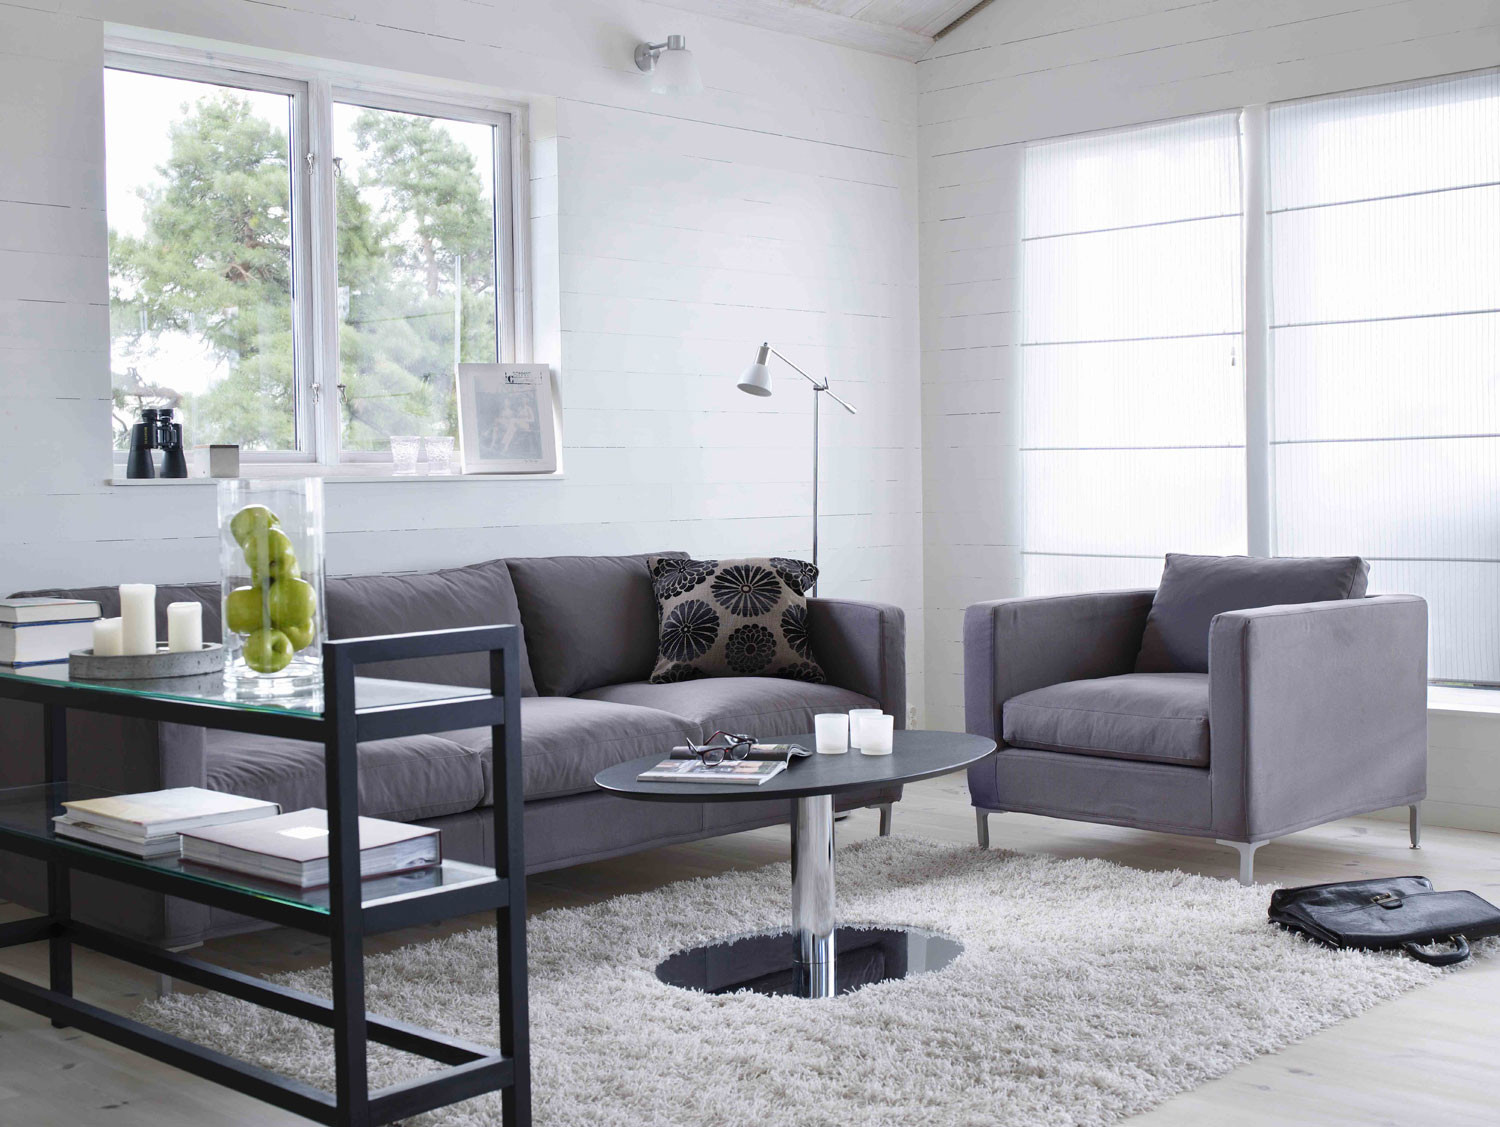 Ikea Living Room Rugs
 IKEA Shag Rug Options – HomesFeed